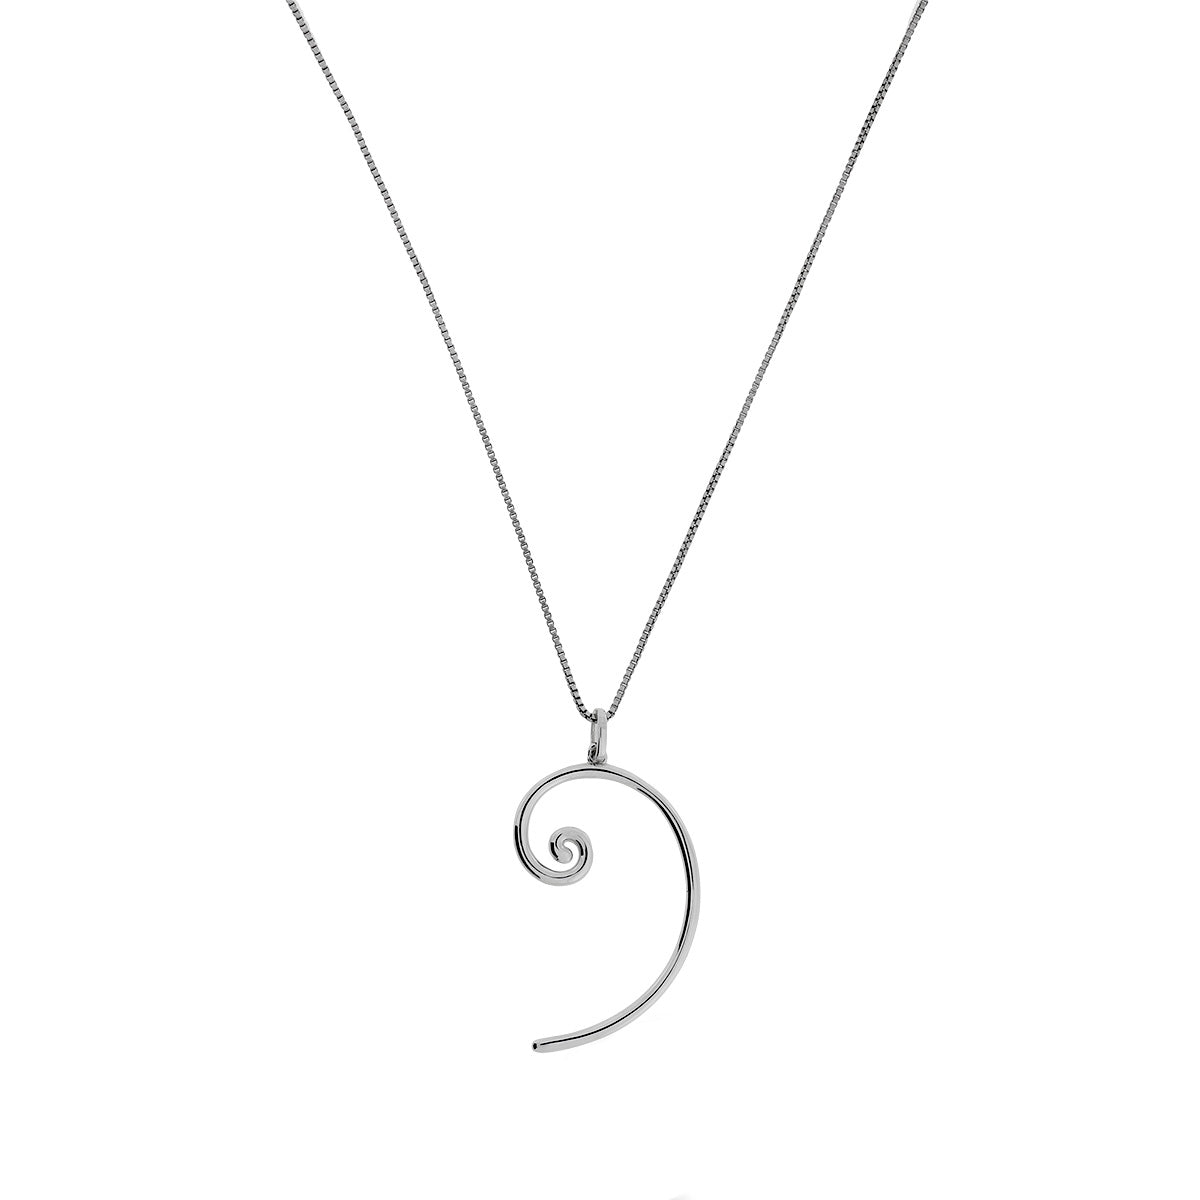 Medium Spiral Pendant in Sterling Silver